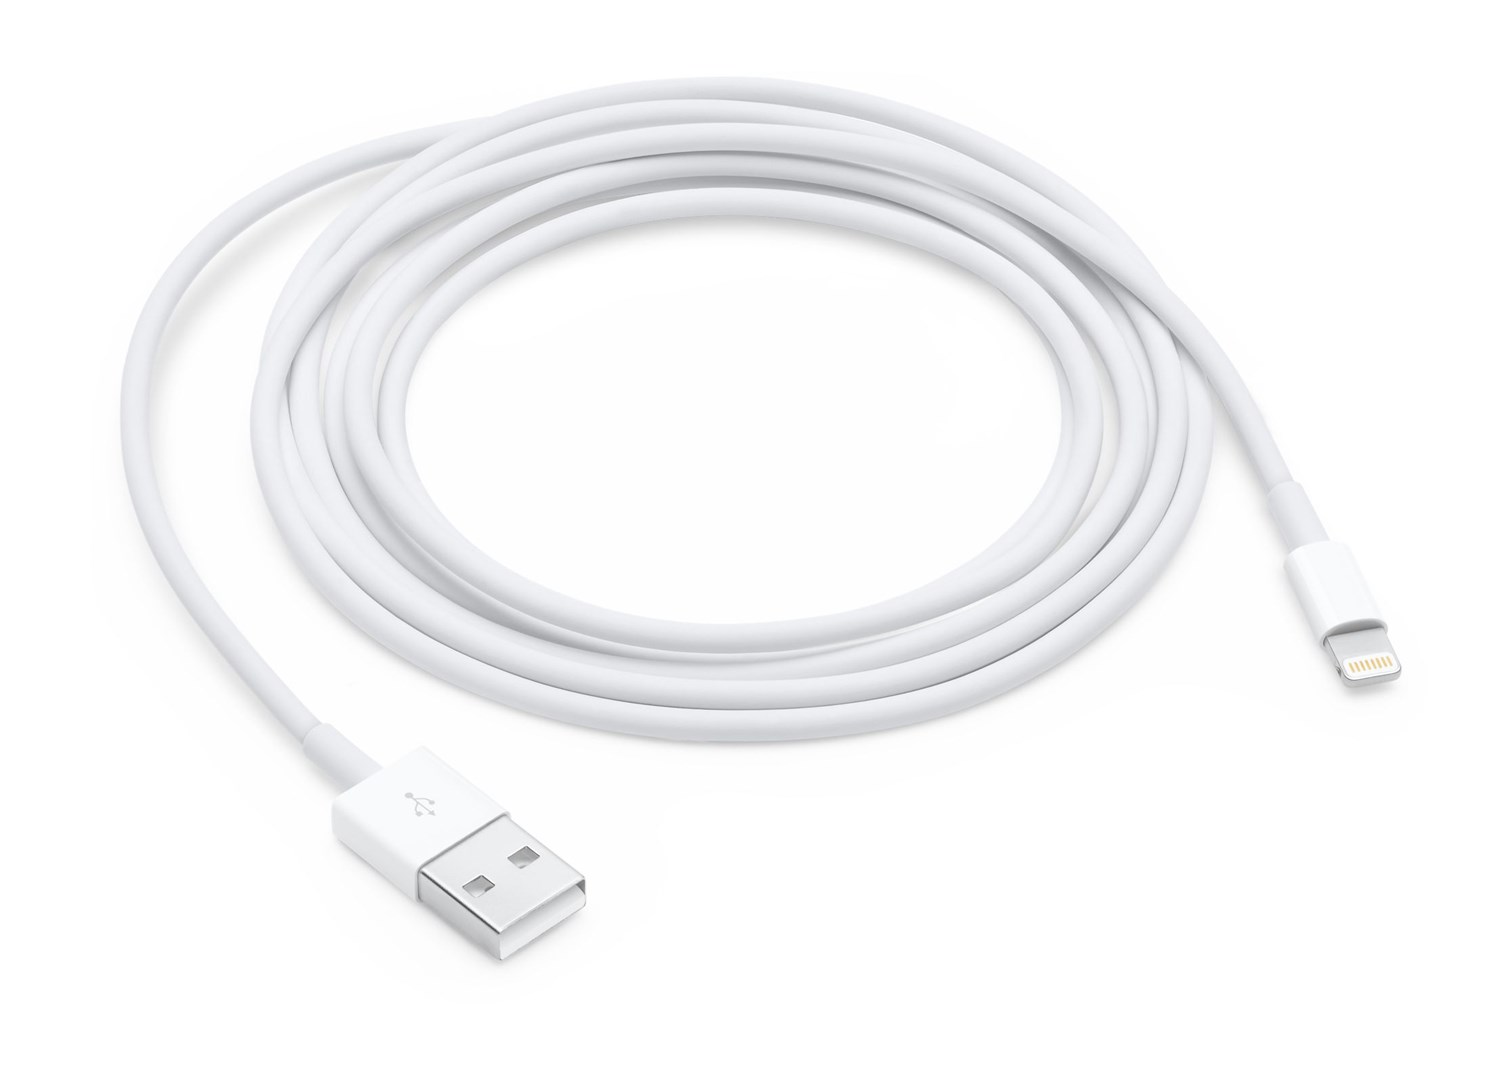 Osta tuote Apple Lightning–USB-kaapeli (2 m) MD819ZM/A verkkokaupastamme Korhone 10% alennuksella koodilla KORHONE